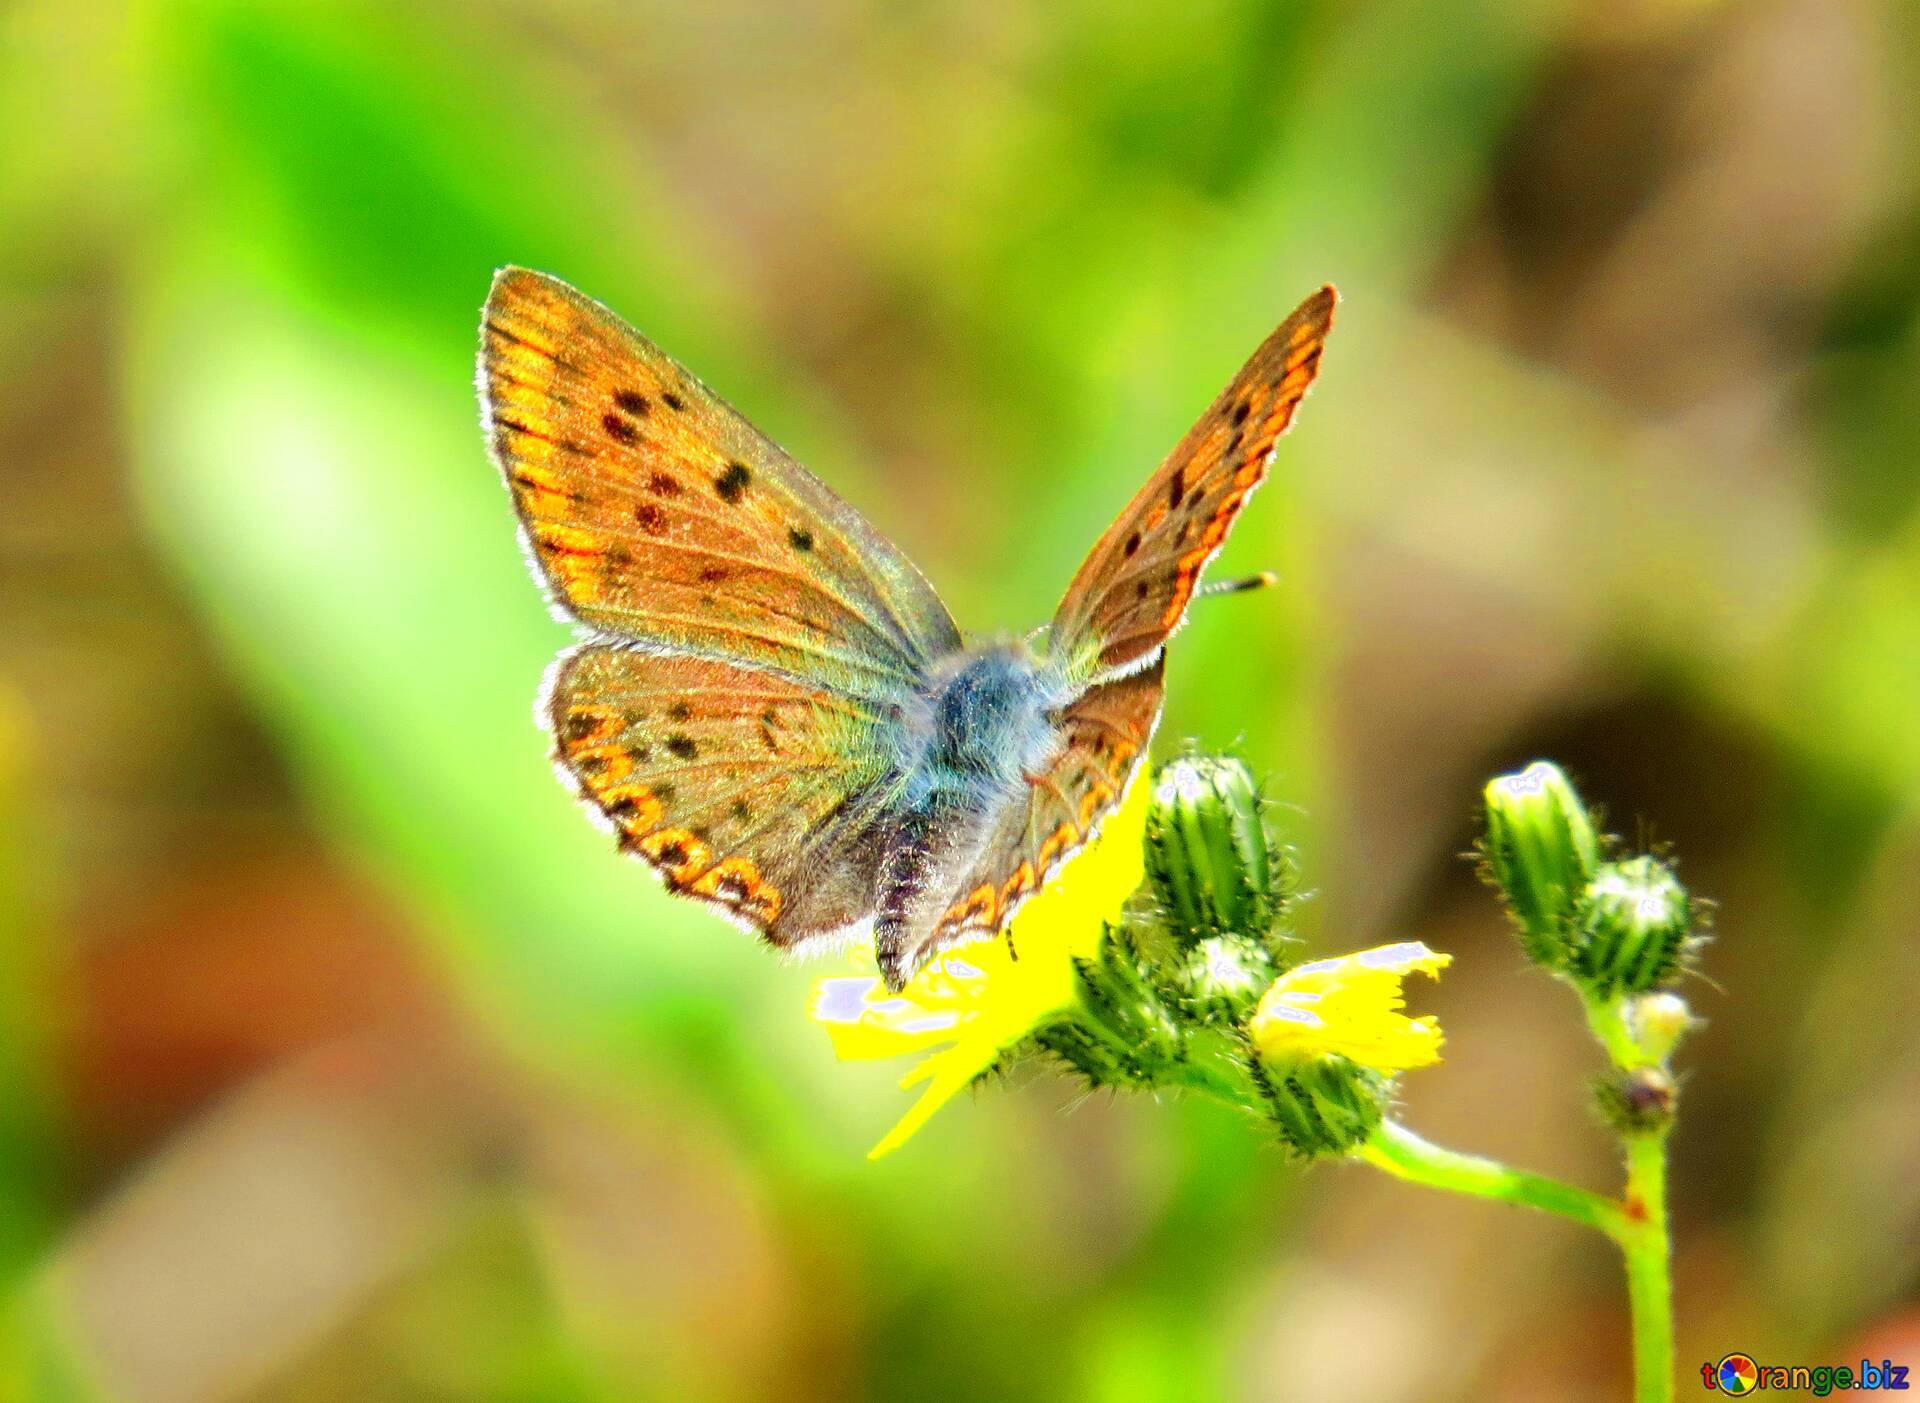 https://torange.biz/photofxnew/137/HD/light-very-vivid-colours-butterfly-flying-137458.jpg